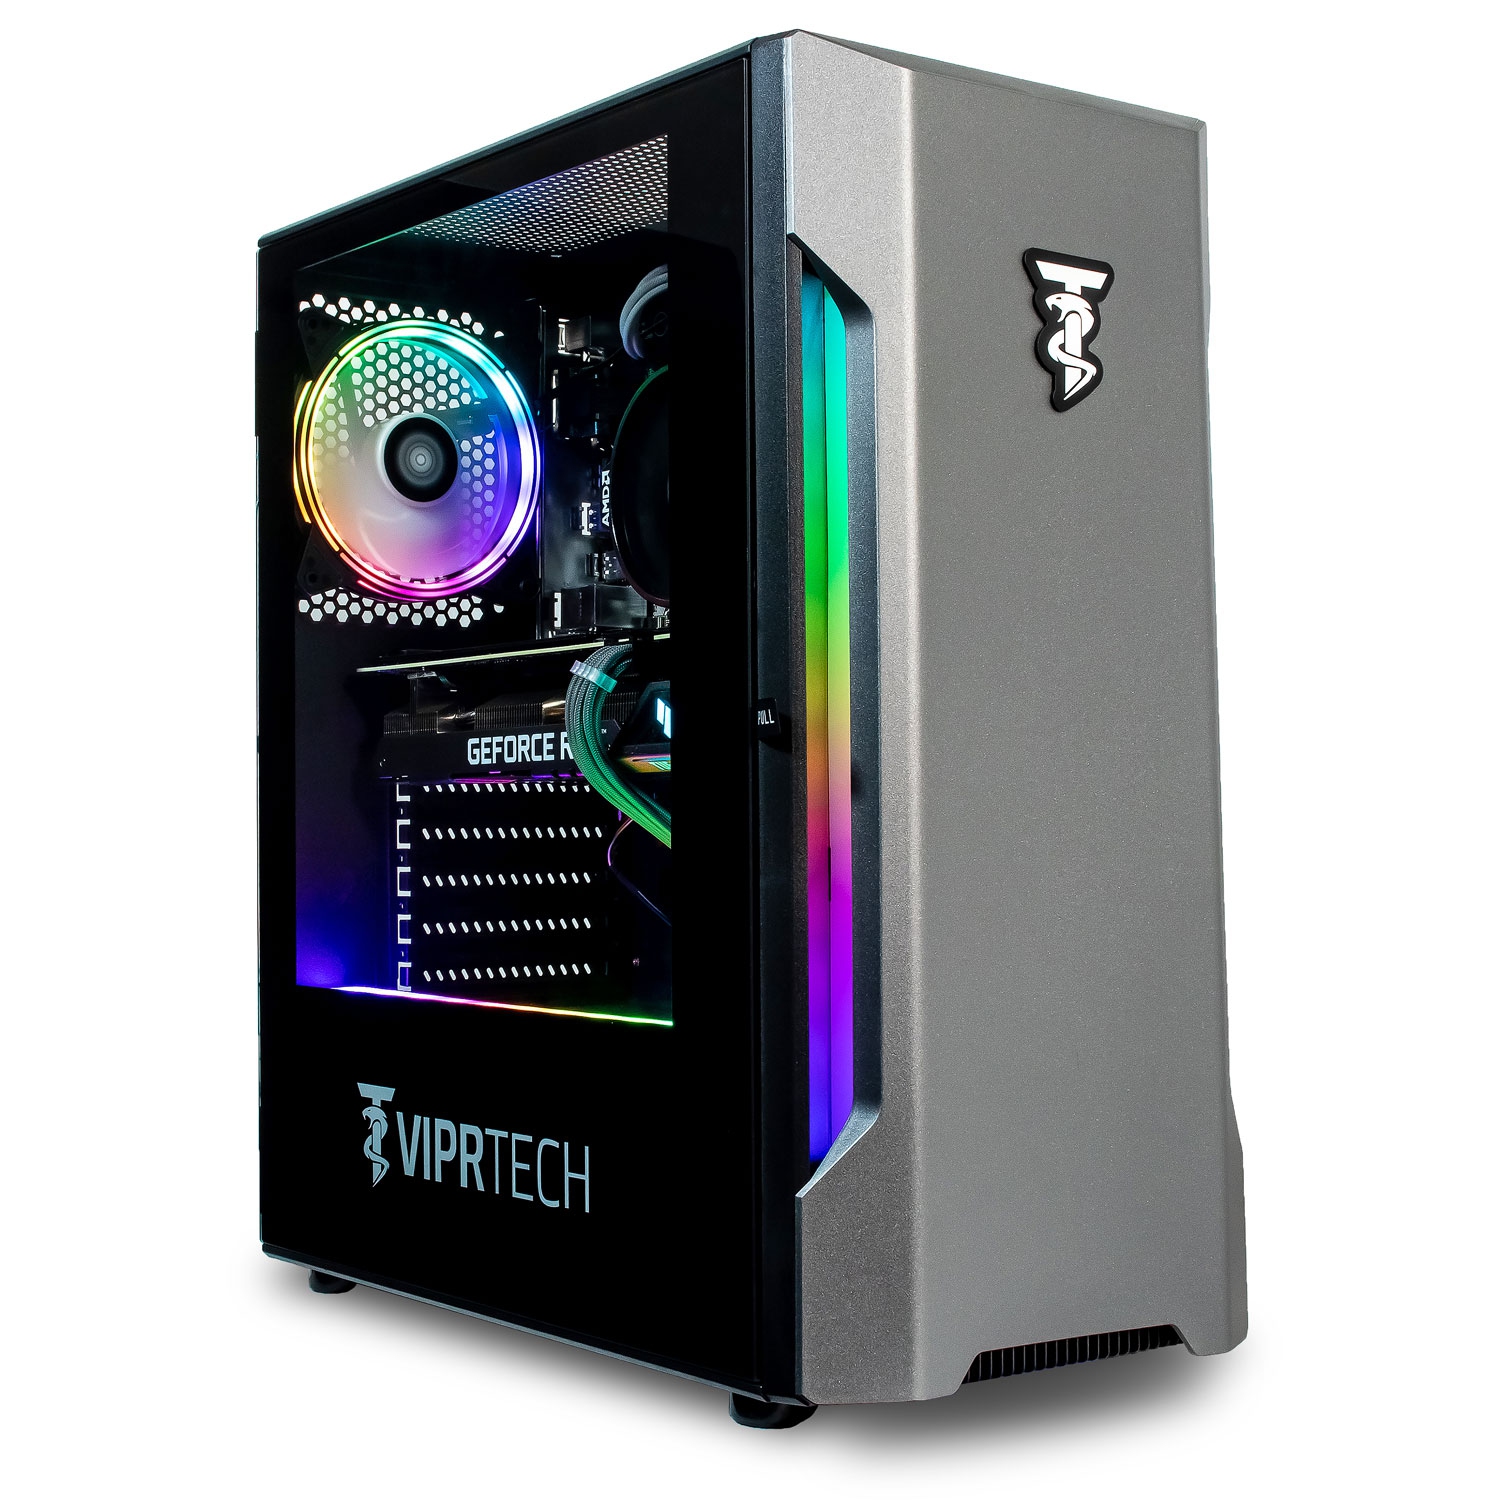 ViprTech Rebel Gaming PC Desktop Computer - AMD Ryzen 5 (12-LCore 3.9Ghz), RTX 3060 12GB, 32GB DDR4 3200 RAM, 1TB NVMe SSD, 600W Gold, VR-Ready, Streaming, WiFi, RGB, Win 11, Black